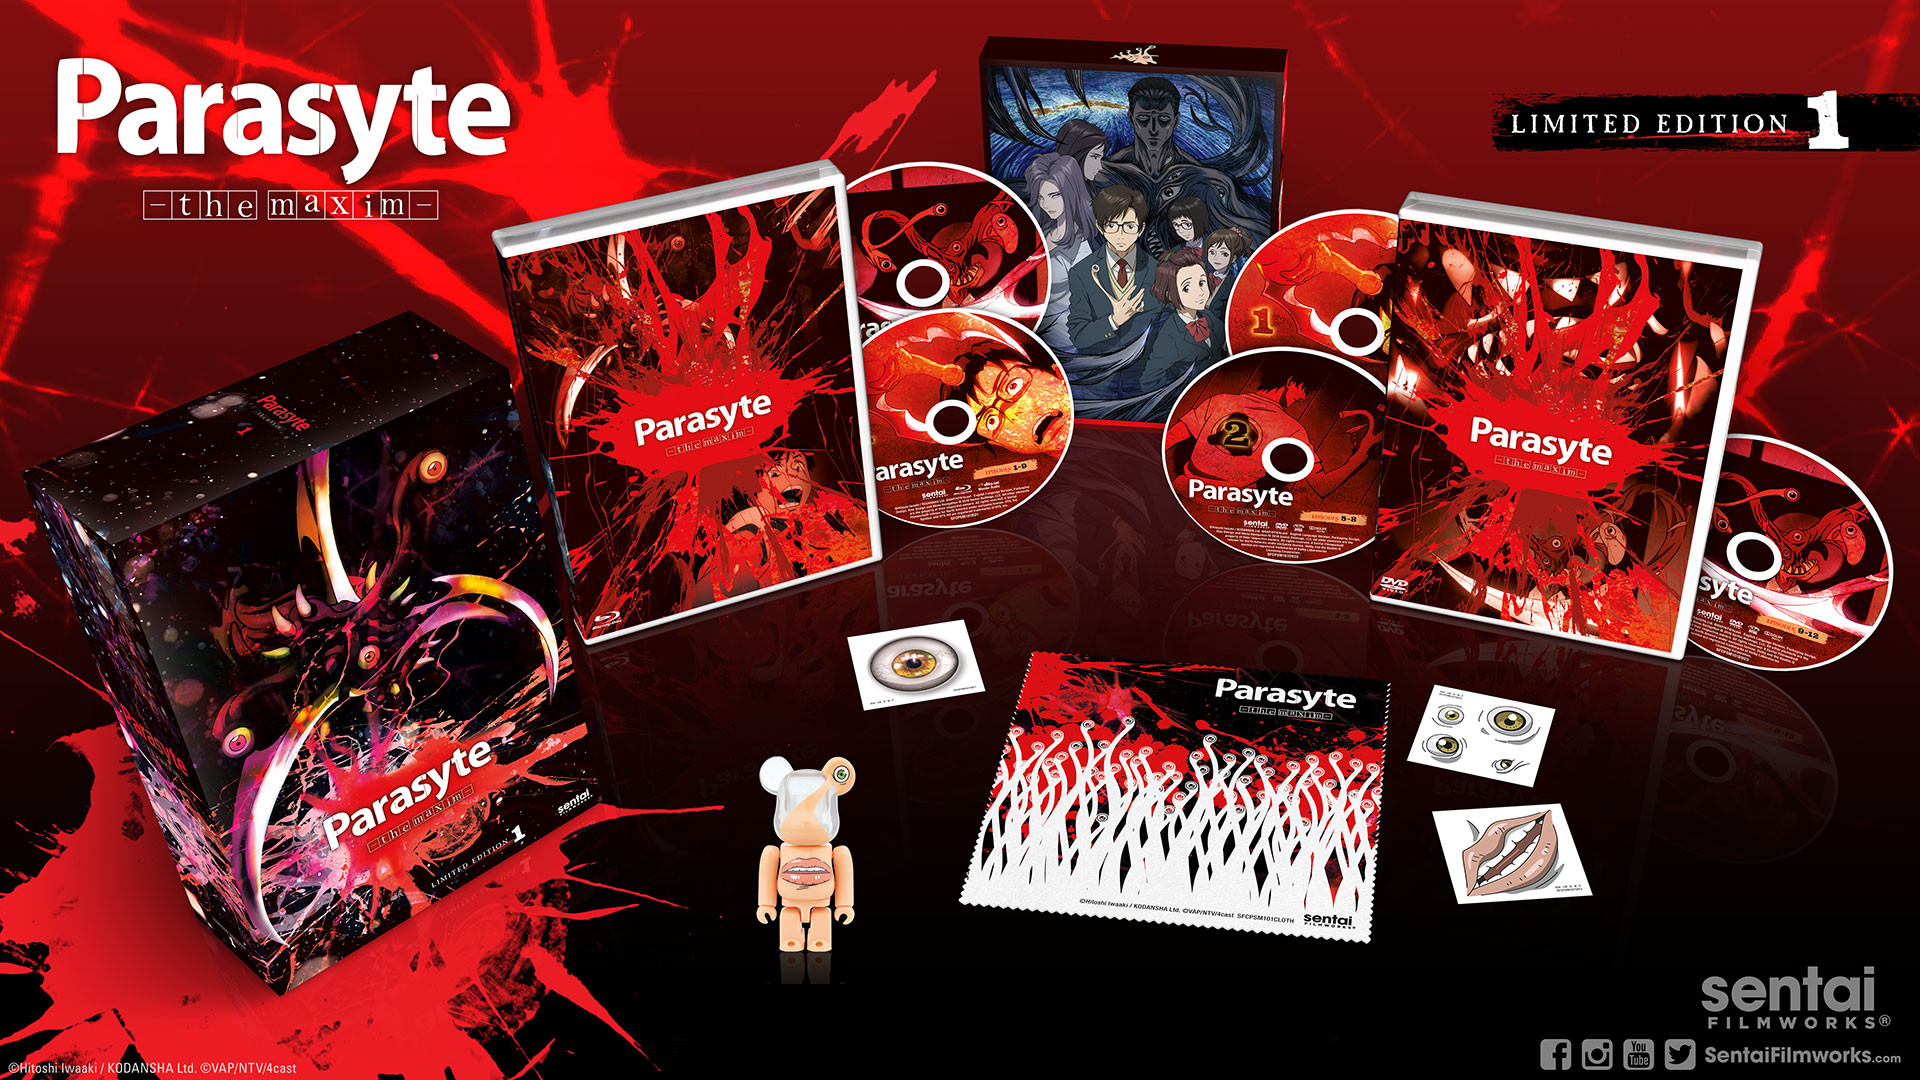 Parasyte -the maxim- Collection 1 Premium Box Set Contents Revealed!